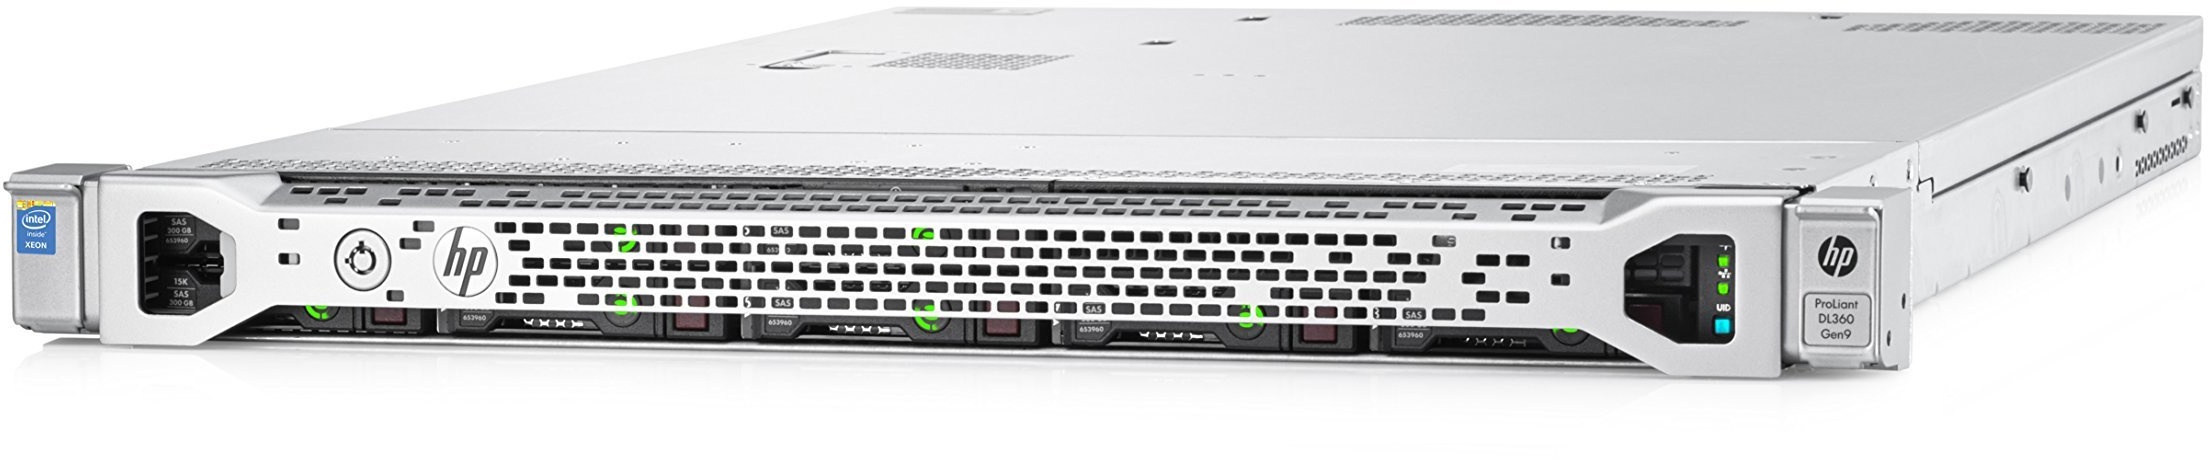 HP ProLiant DL360 Gen9 8SFF Configure-to-Order Server